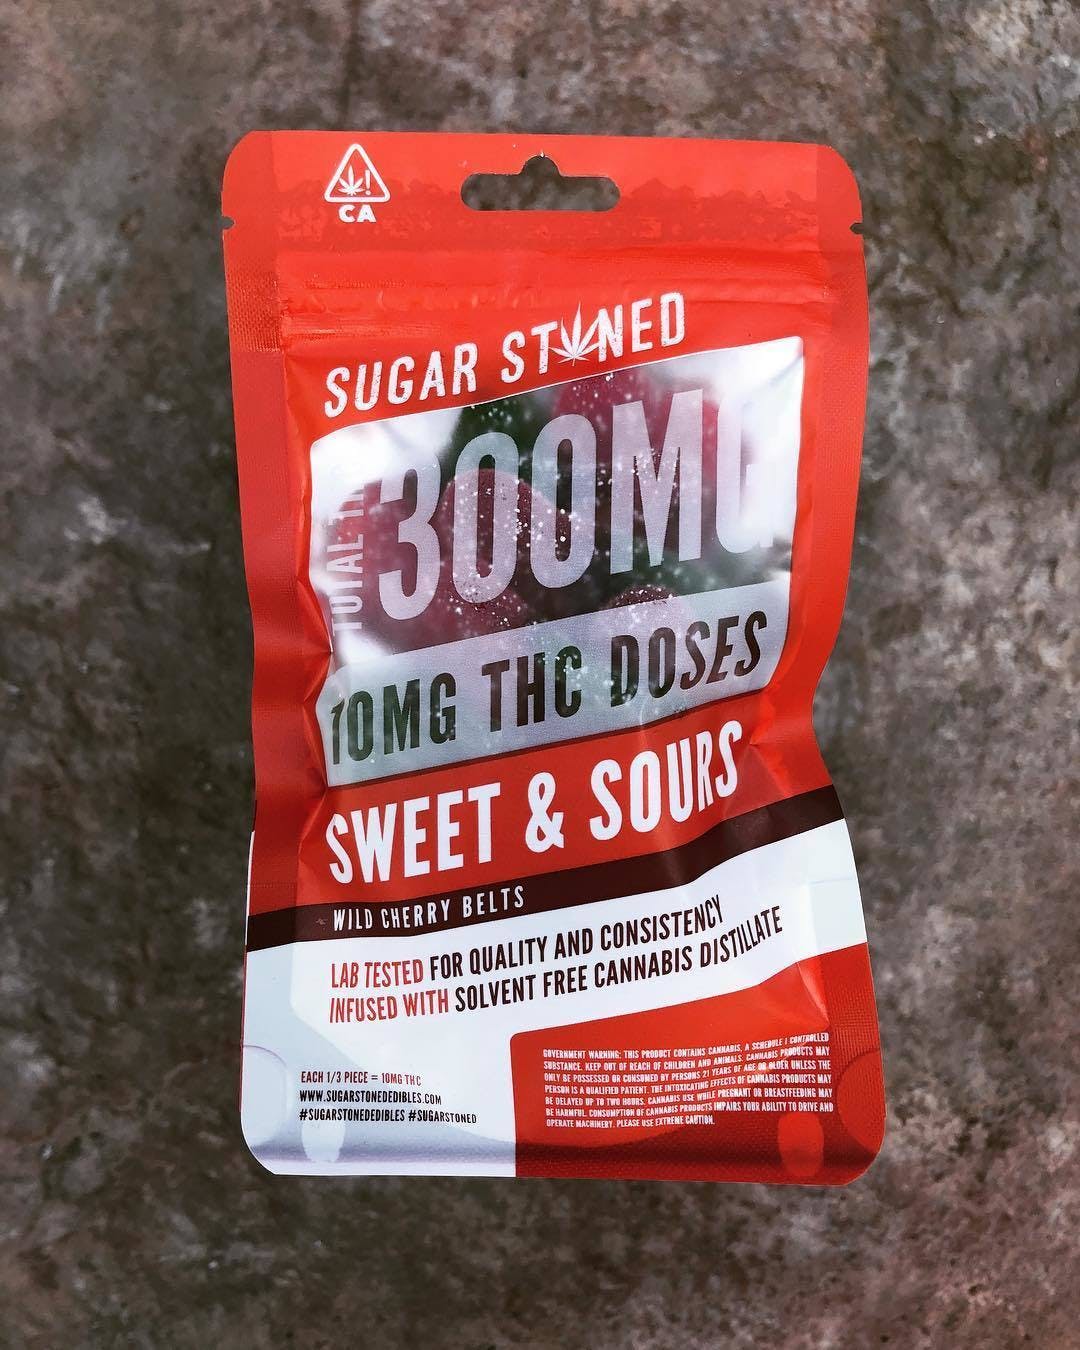 edible-sugar-stoned-edibles-wild-cherry-belts-300mg